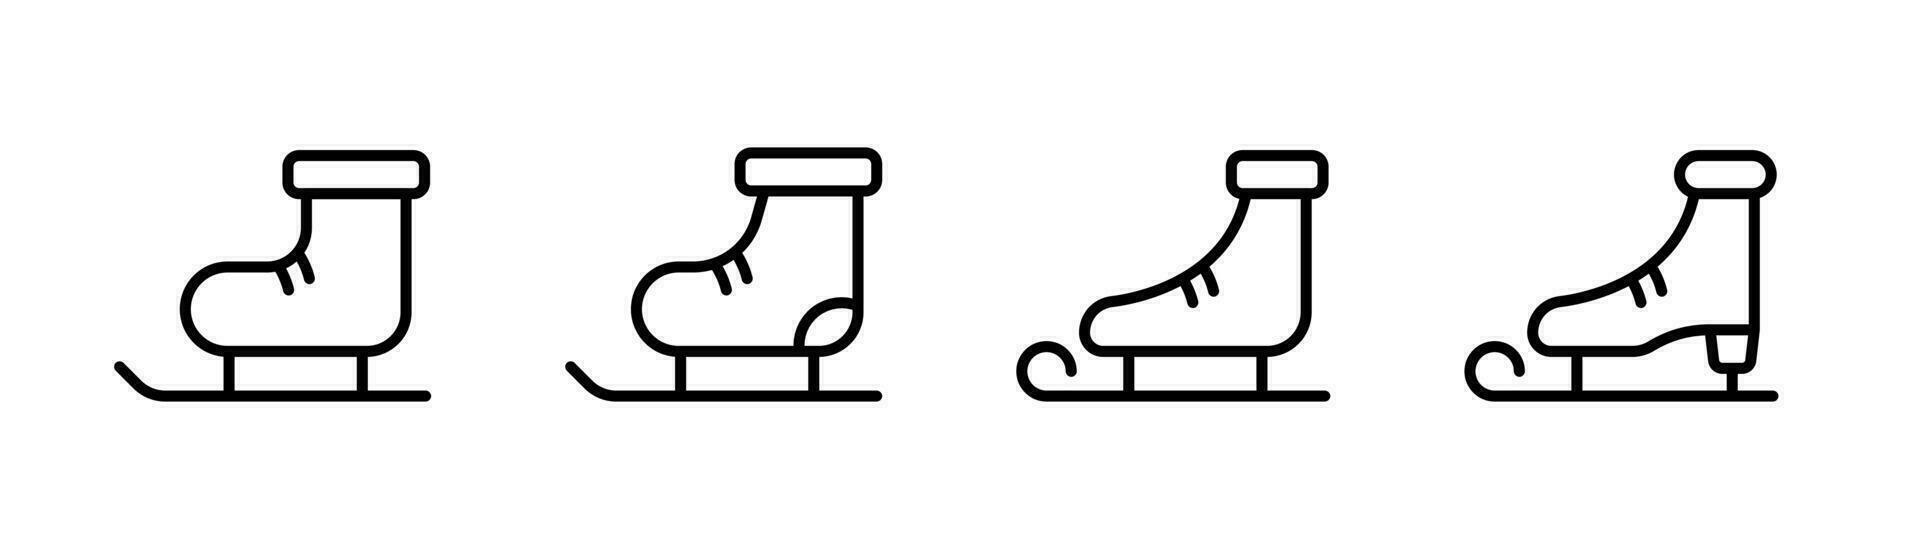 Ice skate line icon. Winter ice skating icon set. Figure skating illustration. Hockey boot sign. Ice skate line icon. Editable stroke. Stock vector illustration.